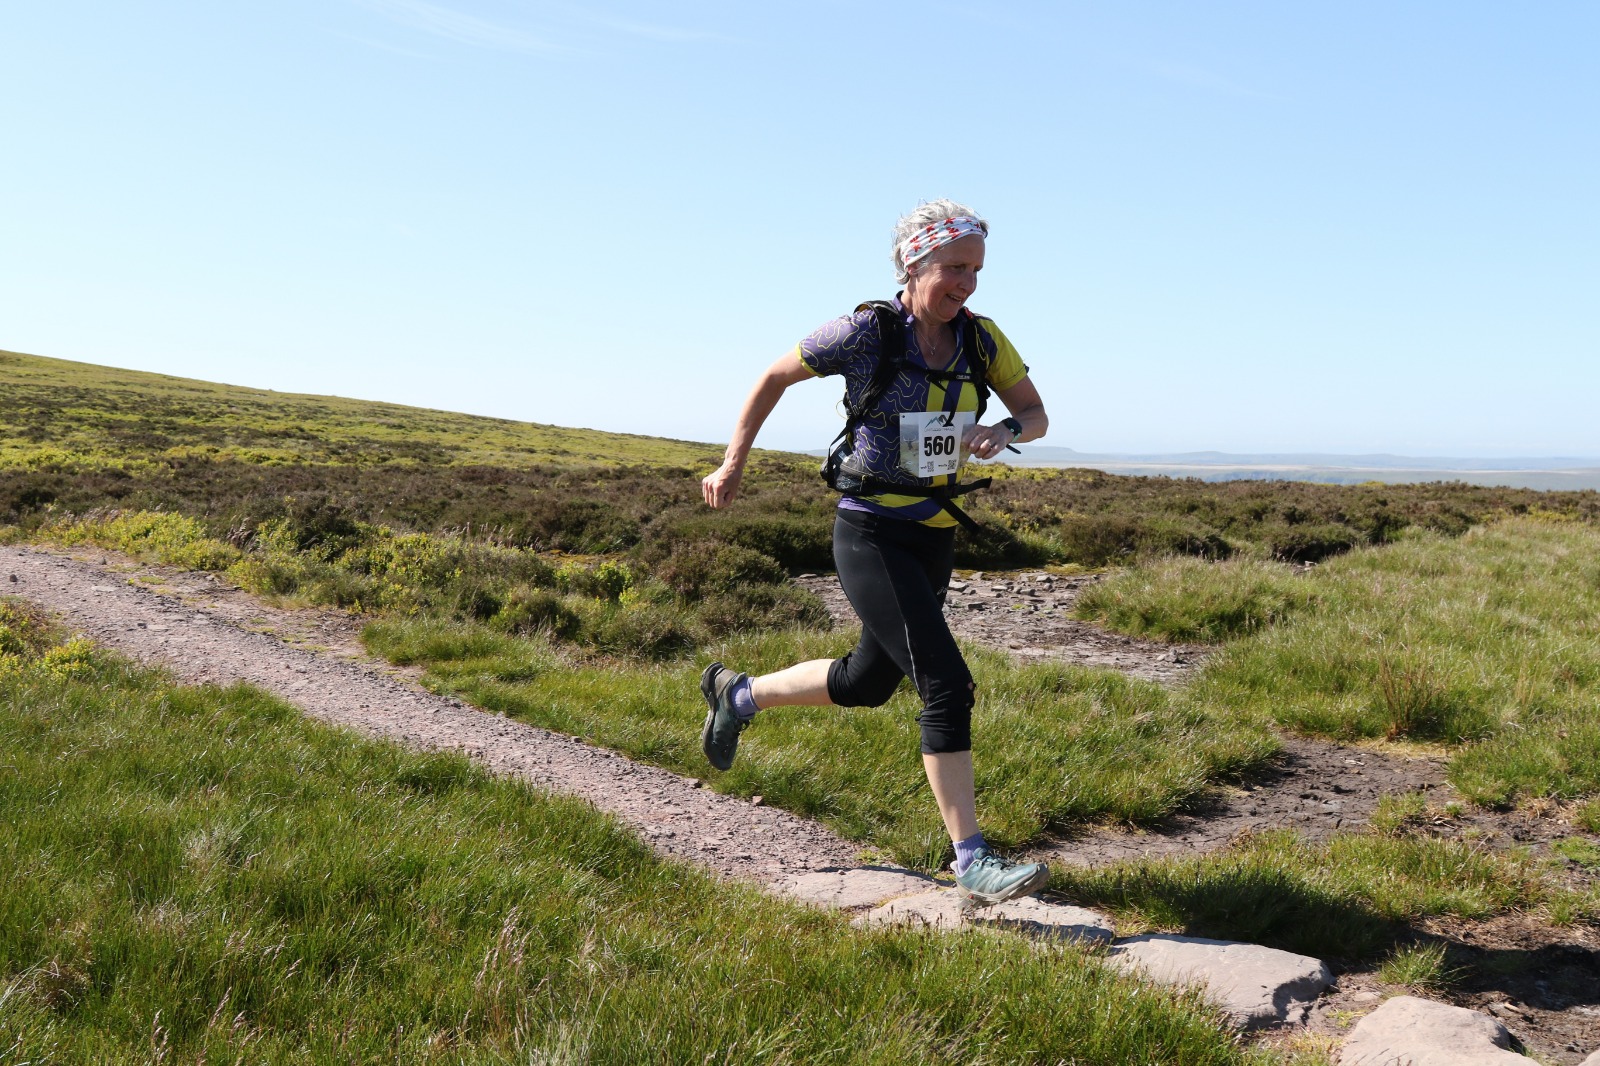 Woman aged 50-60 with grey hair running a half marathon